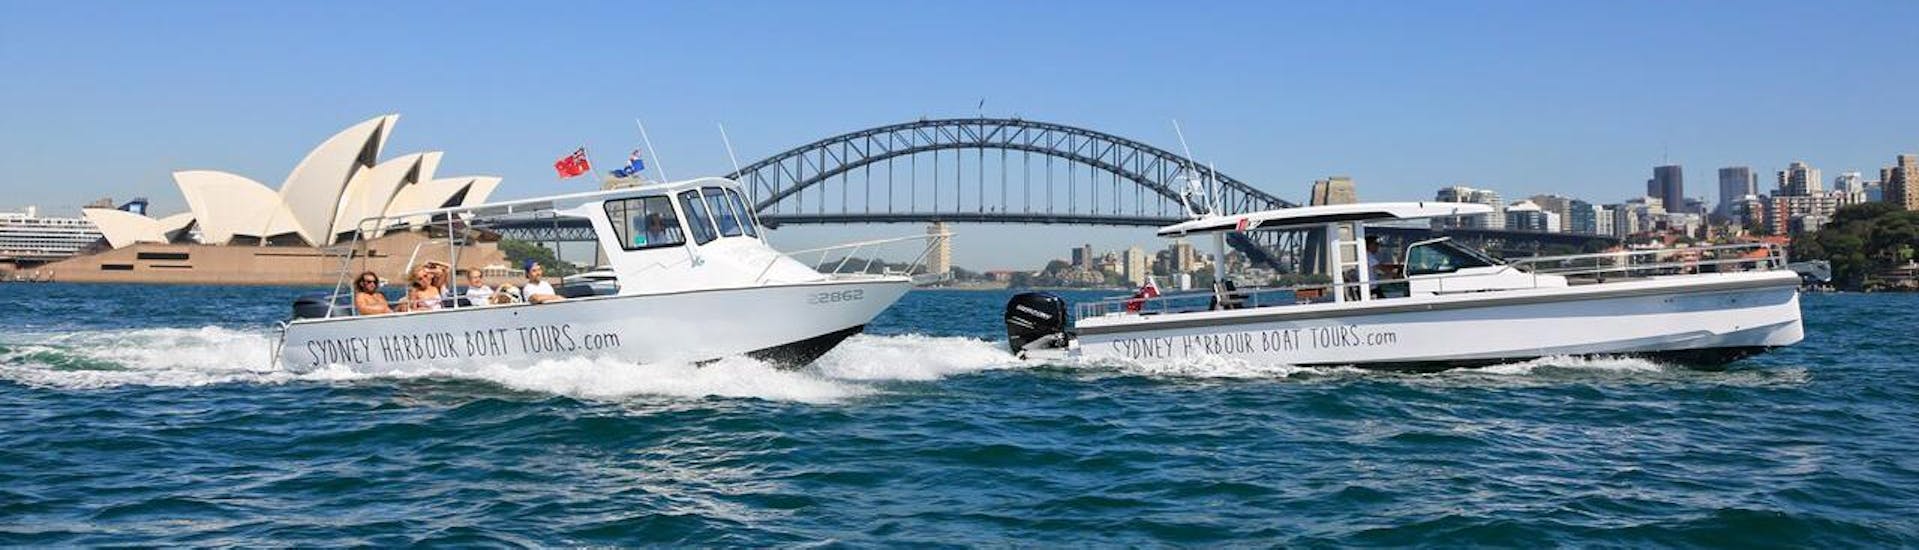 full-day-sydney-boat-tour-sydney-harbour-boat-tours